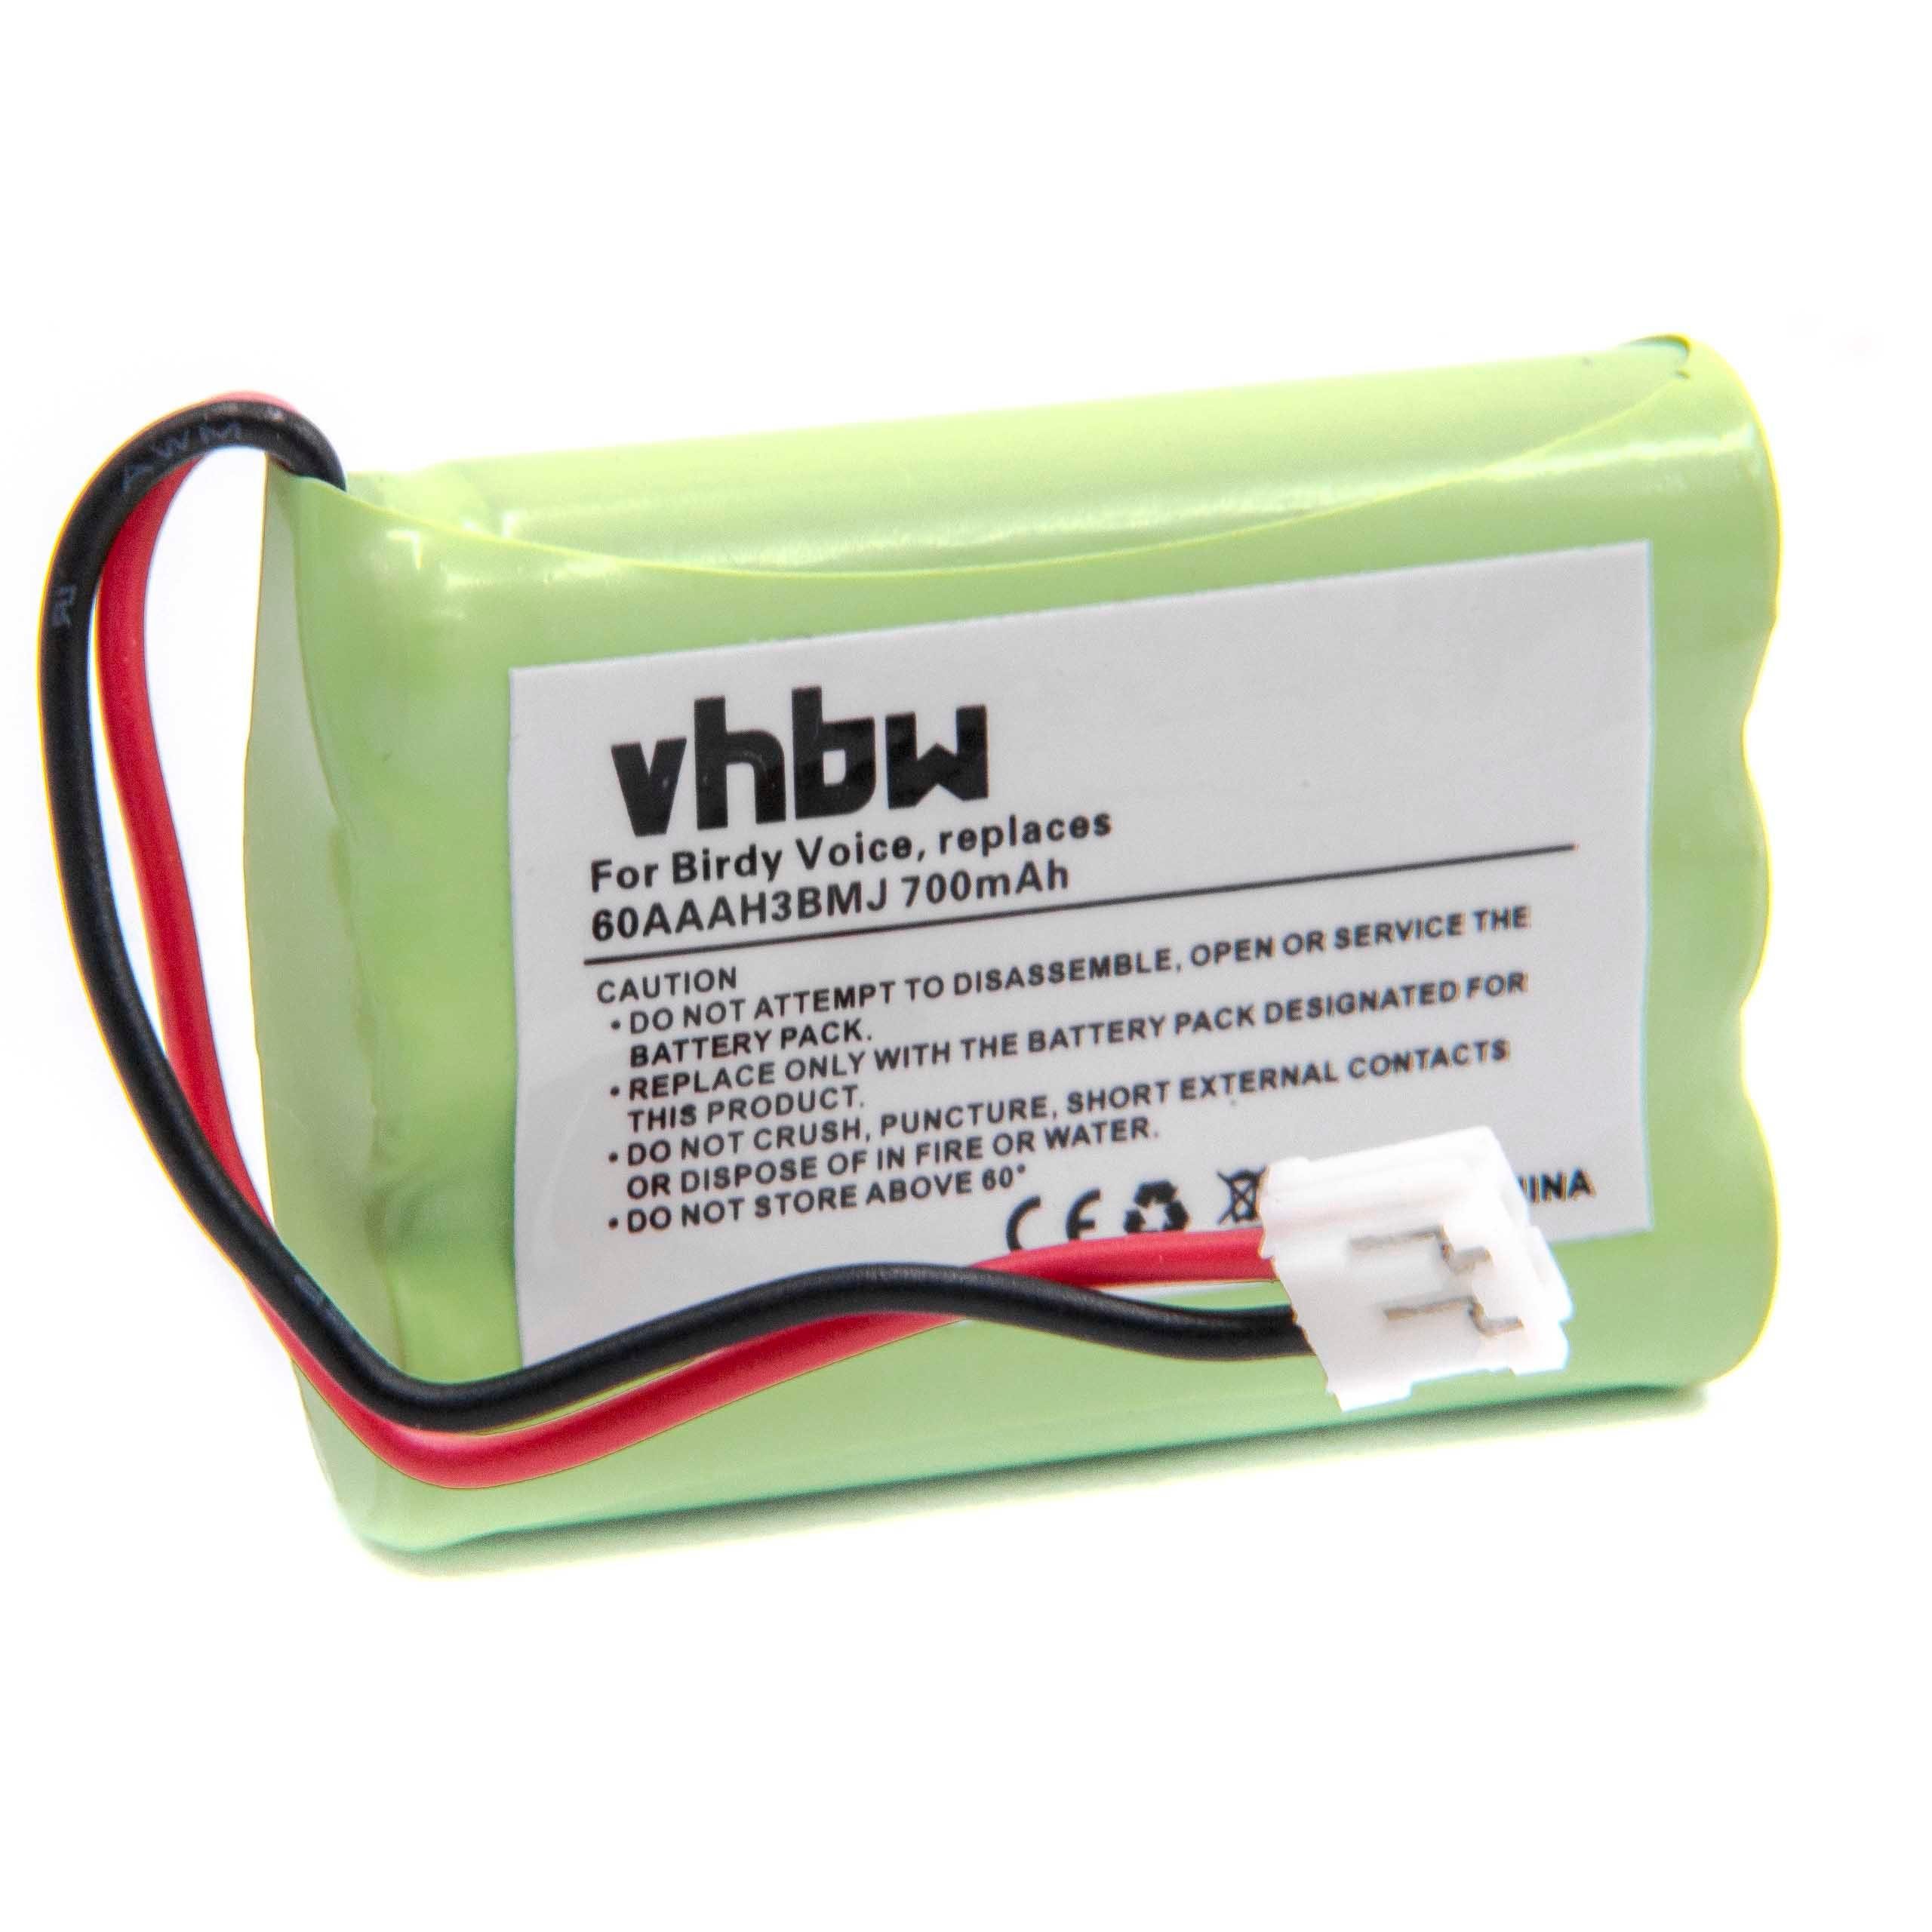 vhbw kompatibel mit NTL R77, R88;, R66 Akku NiMH 700 mAh (3,6 V)